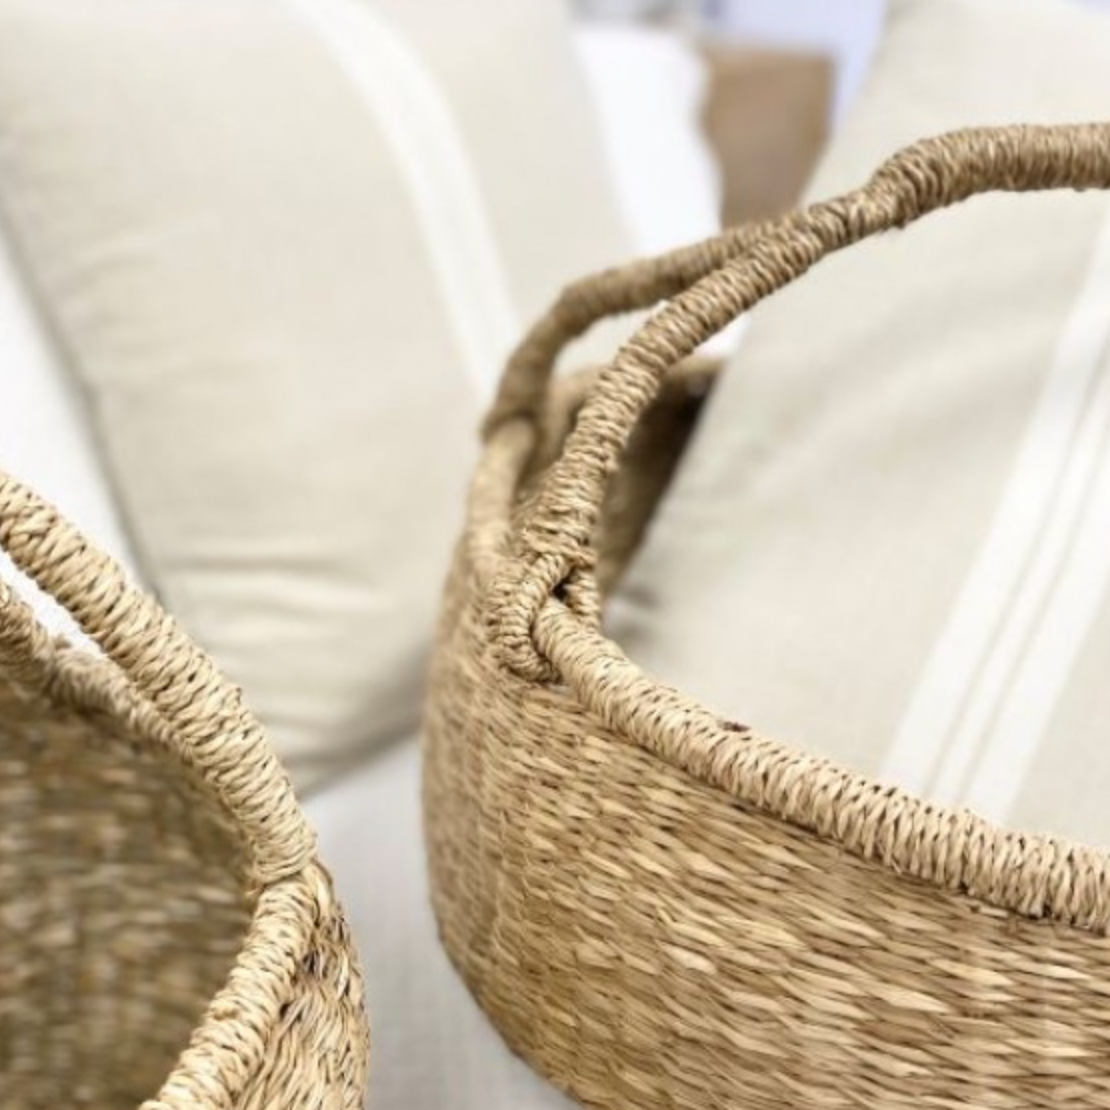 Nesbit Round Baskets w Handle - Different sizes available - Daisy Grace Lifestyle